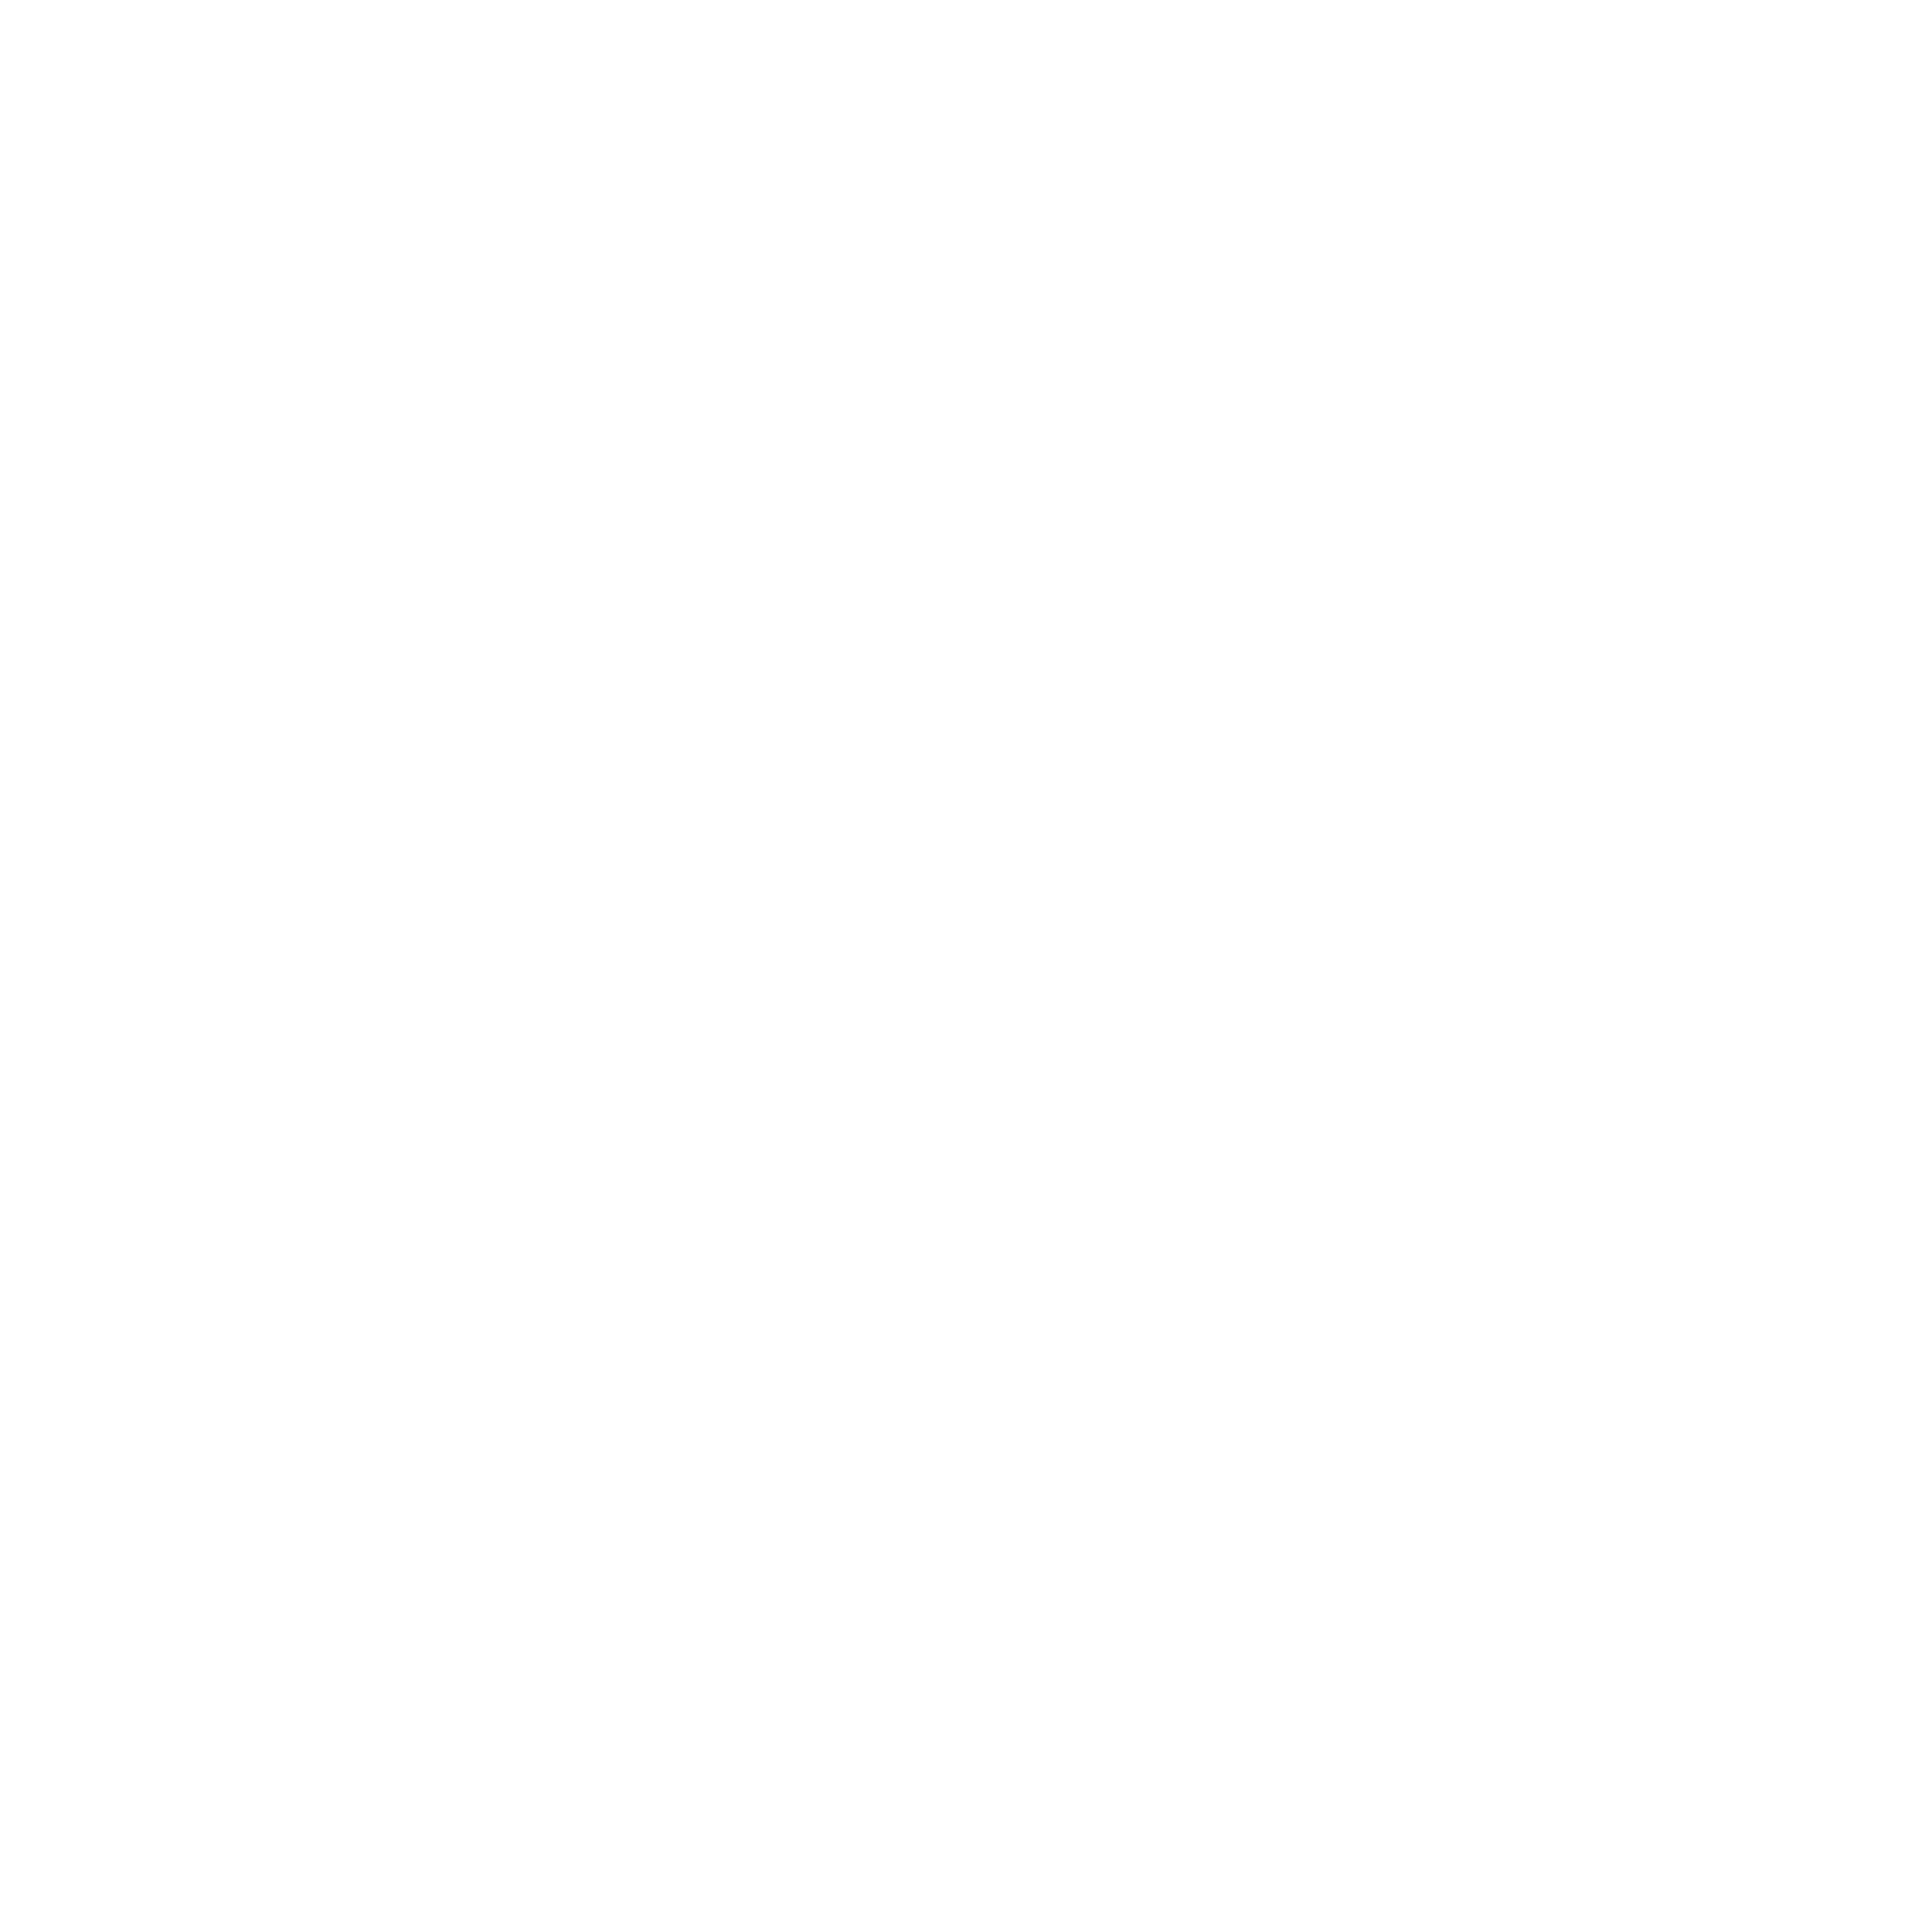 UNIDO Inno Lab Logo